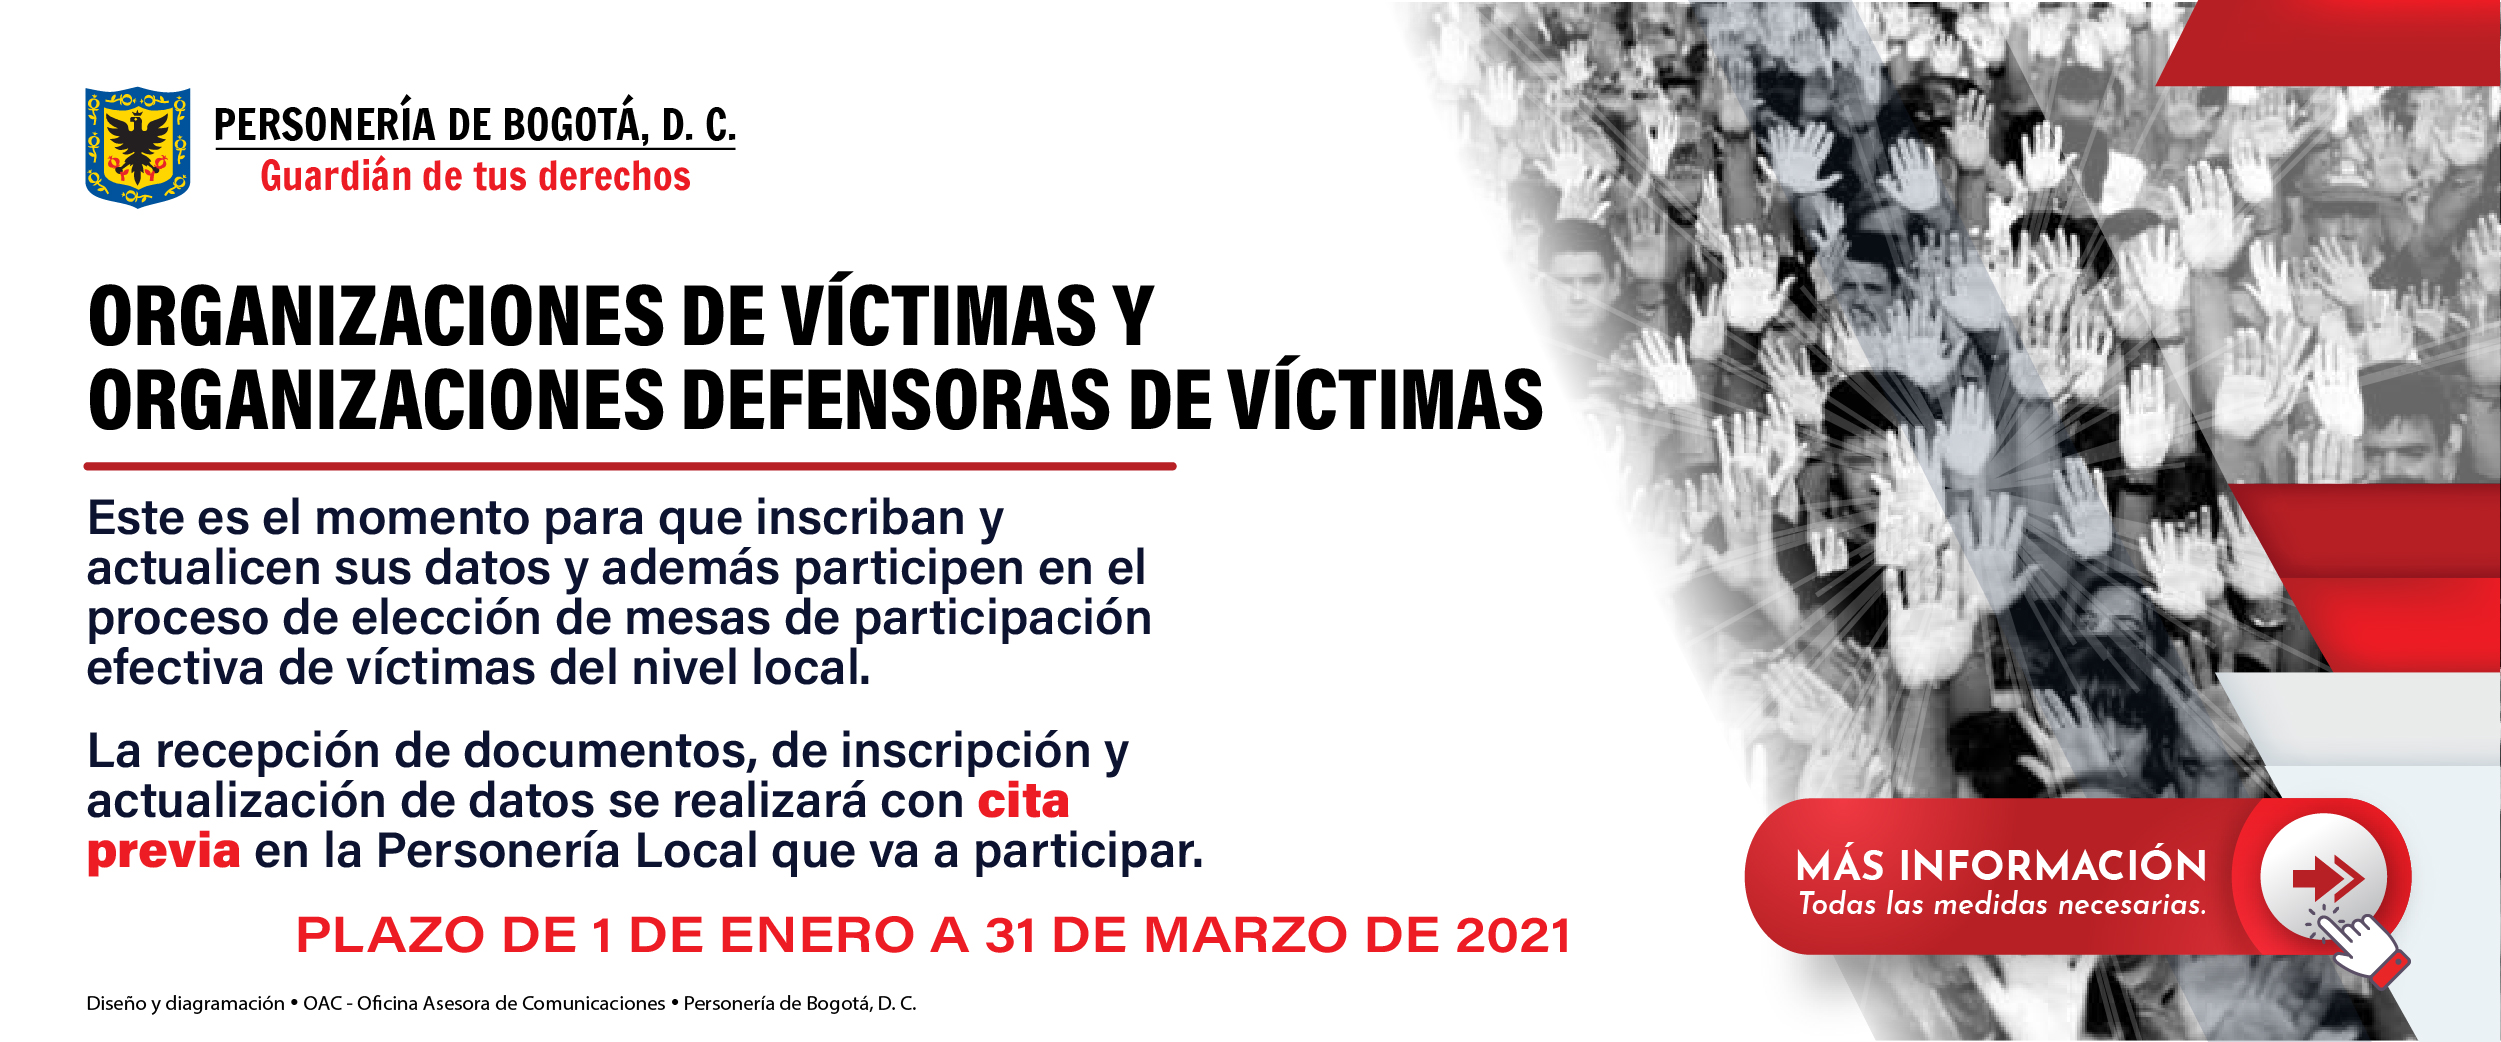 org-victimas-defensores-victimas-banner-web.jpg - 1.07 MB